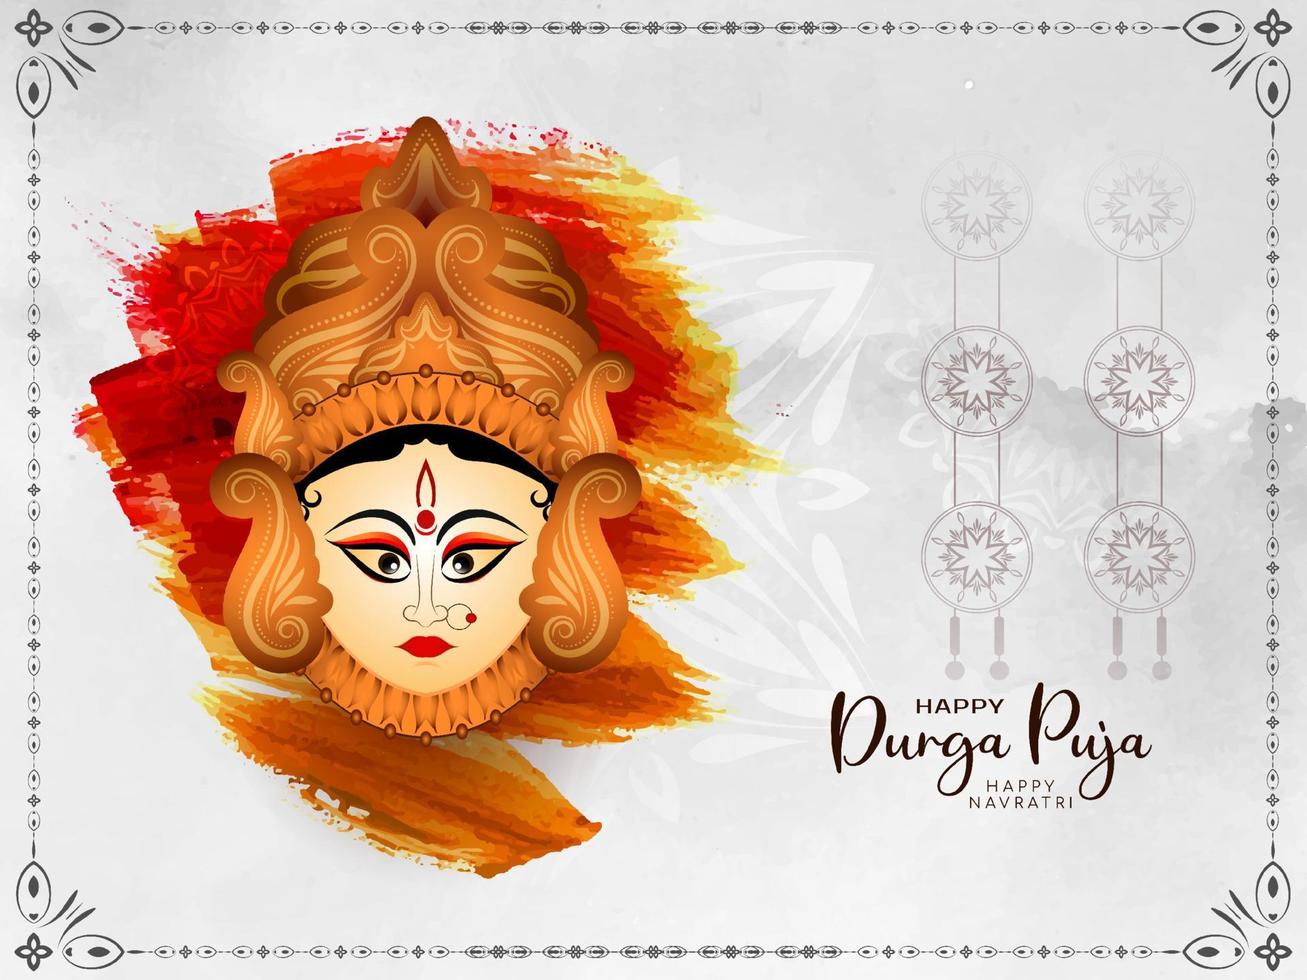 Beautiful Happy navratri and Durga puja festival celebration greeting card vector